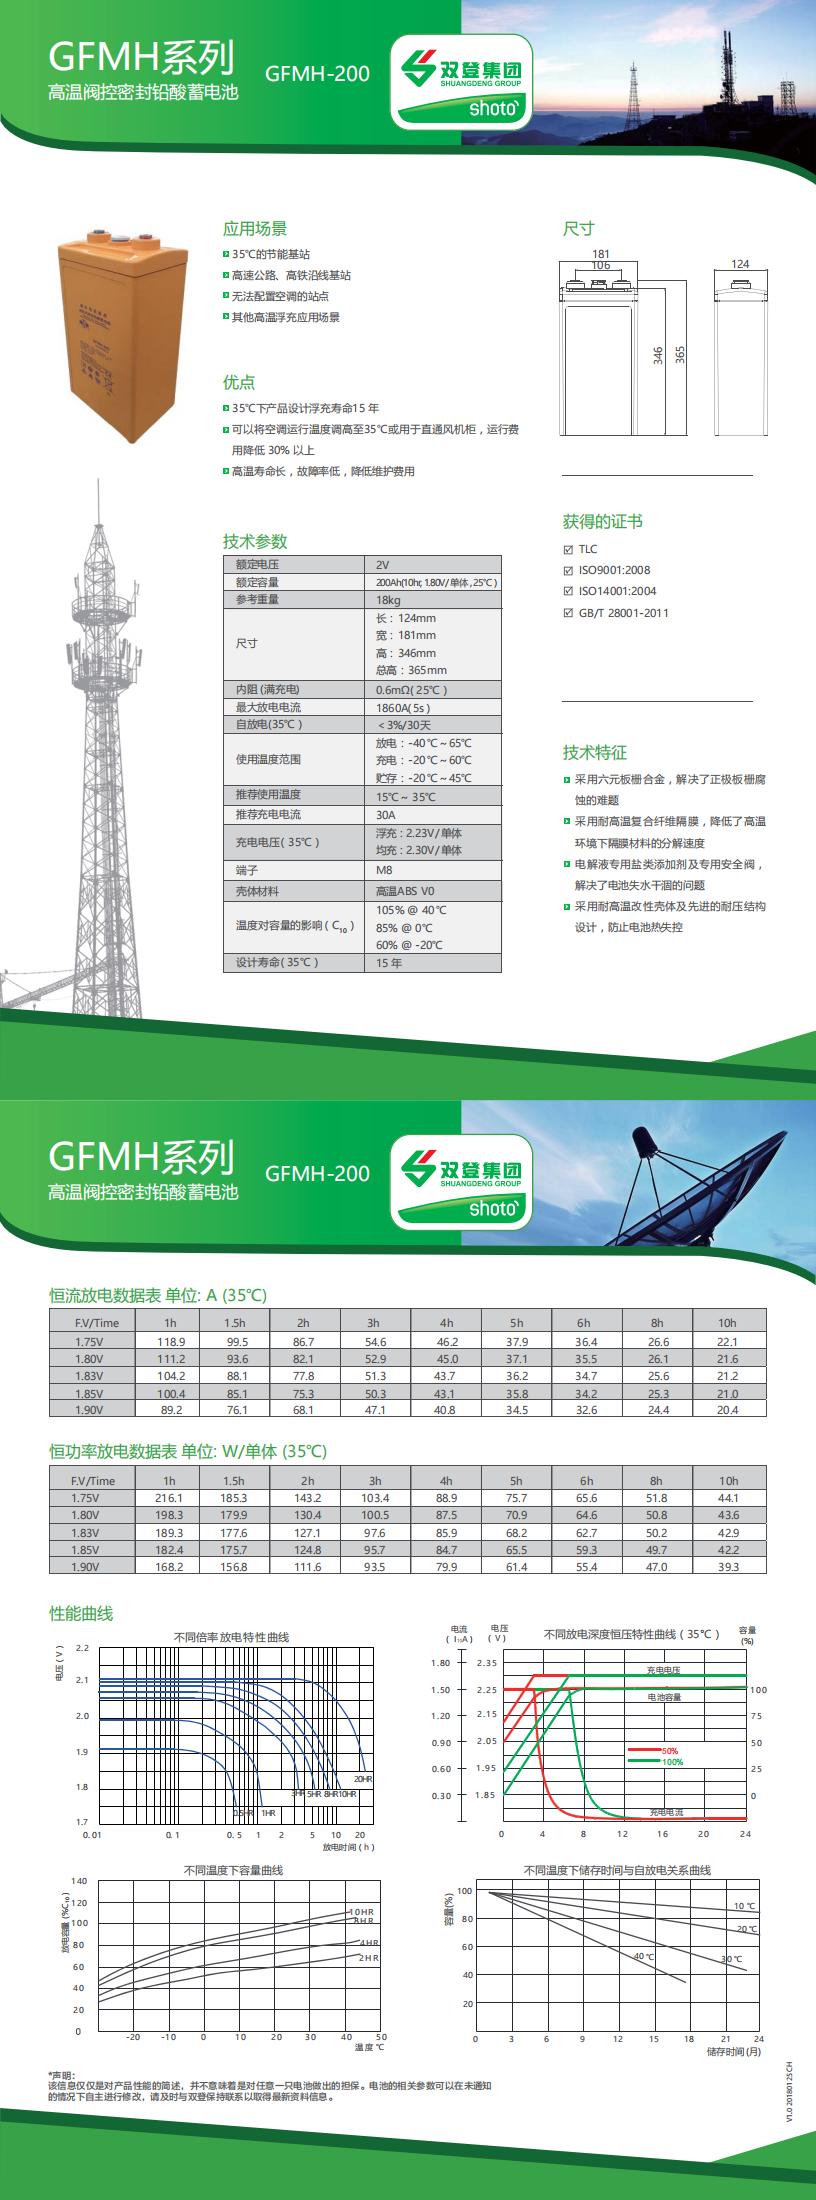 GFMH-200中文_00.jpg